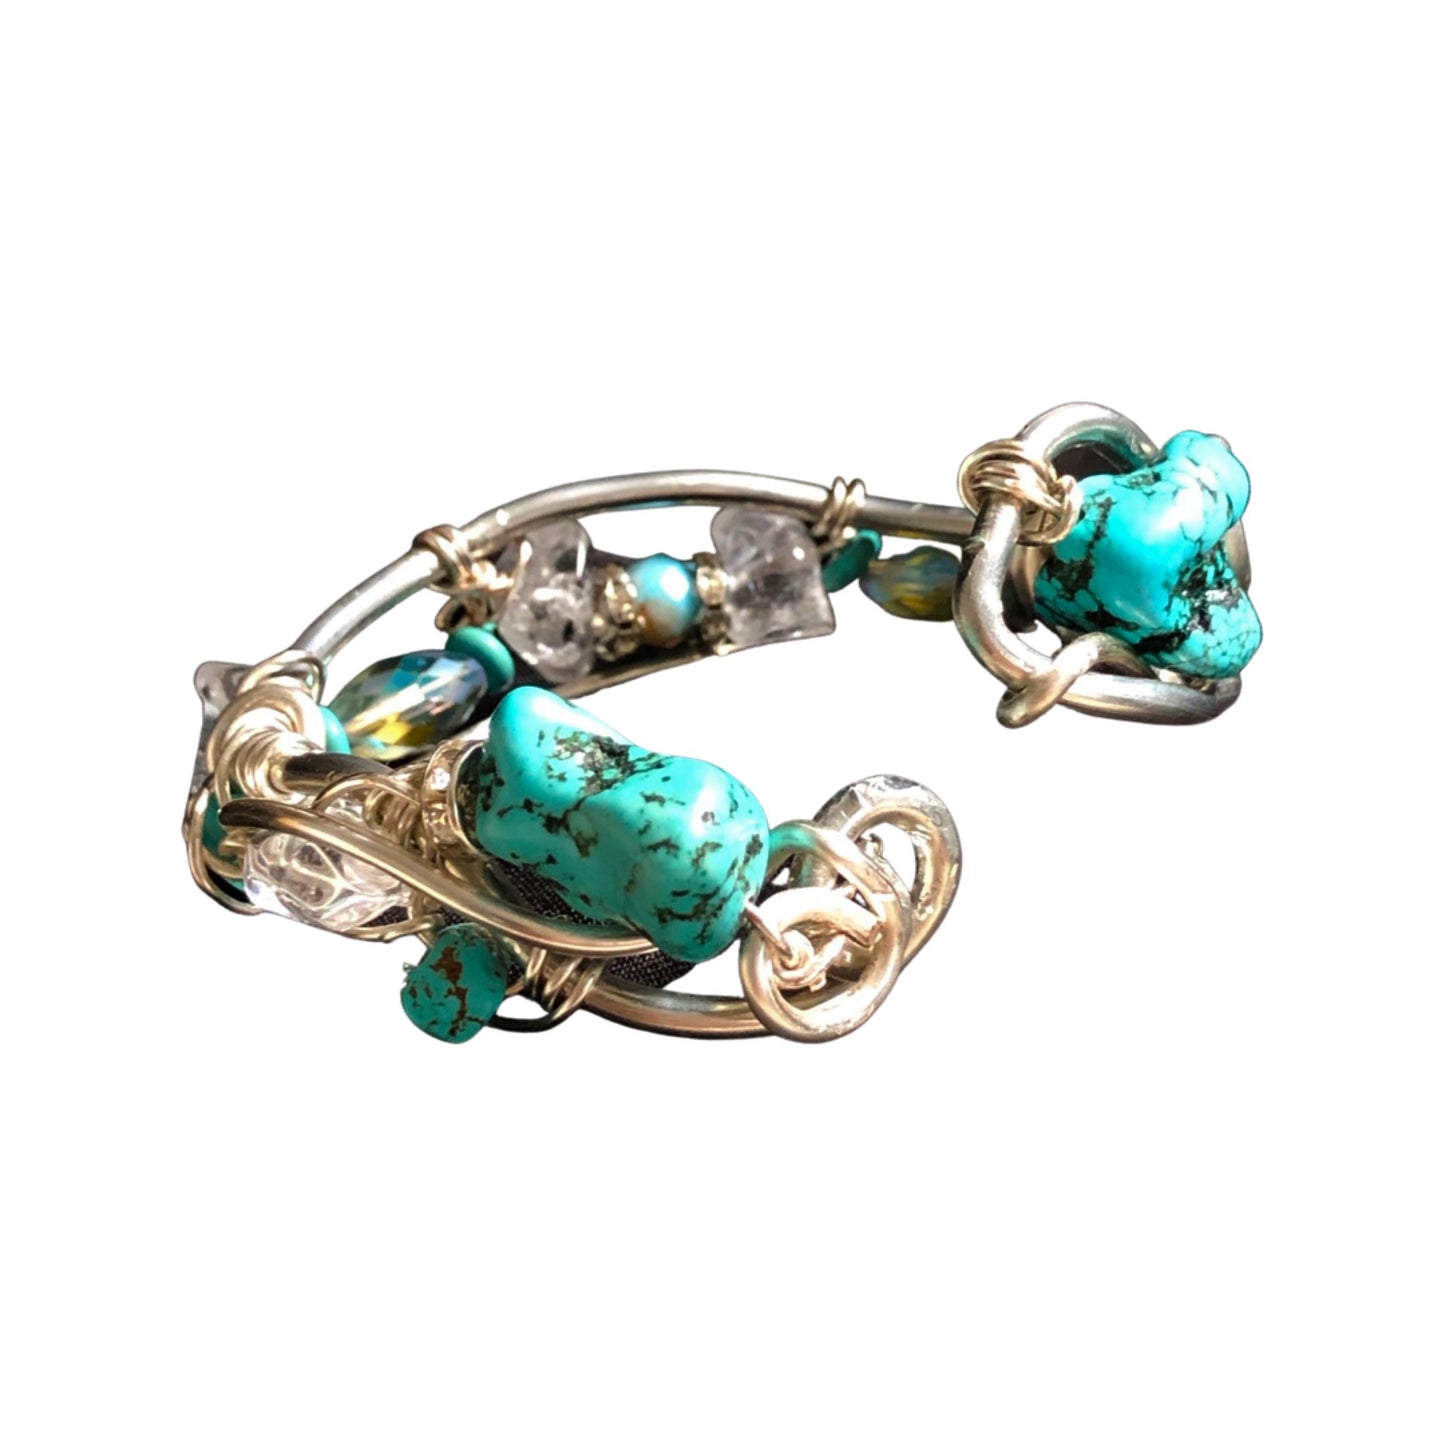 Turquoise beaded bracelet